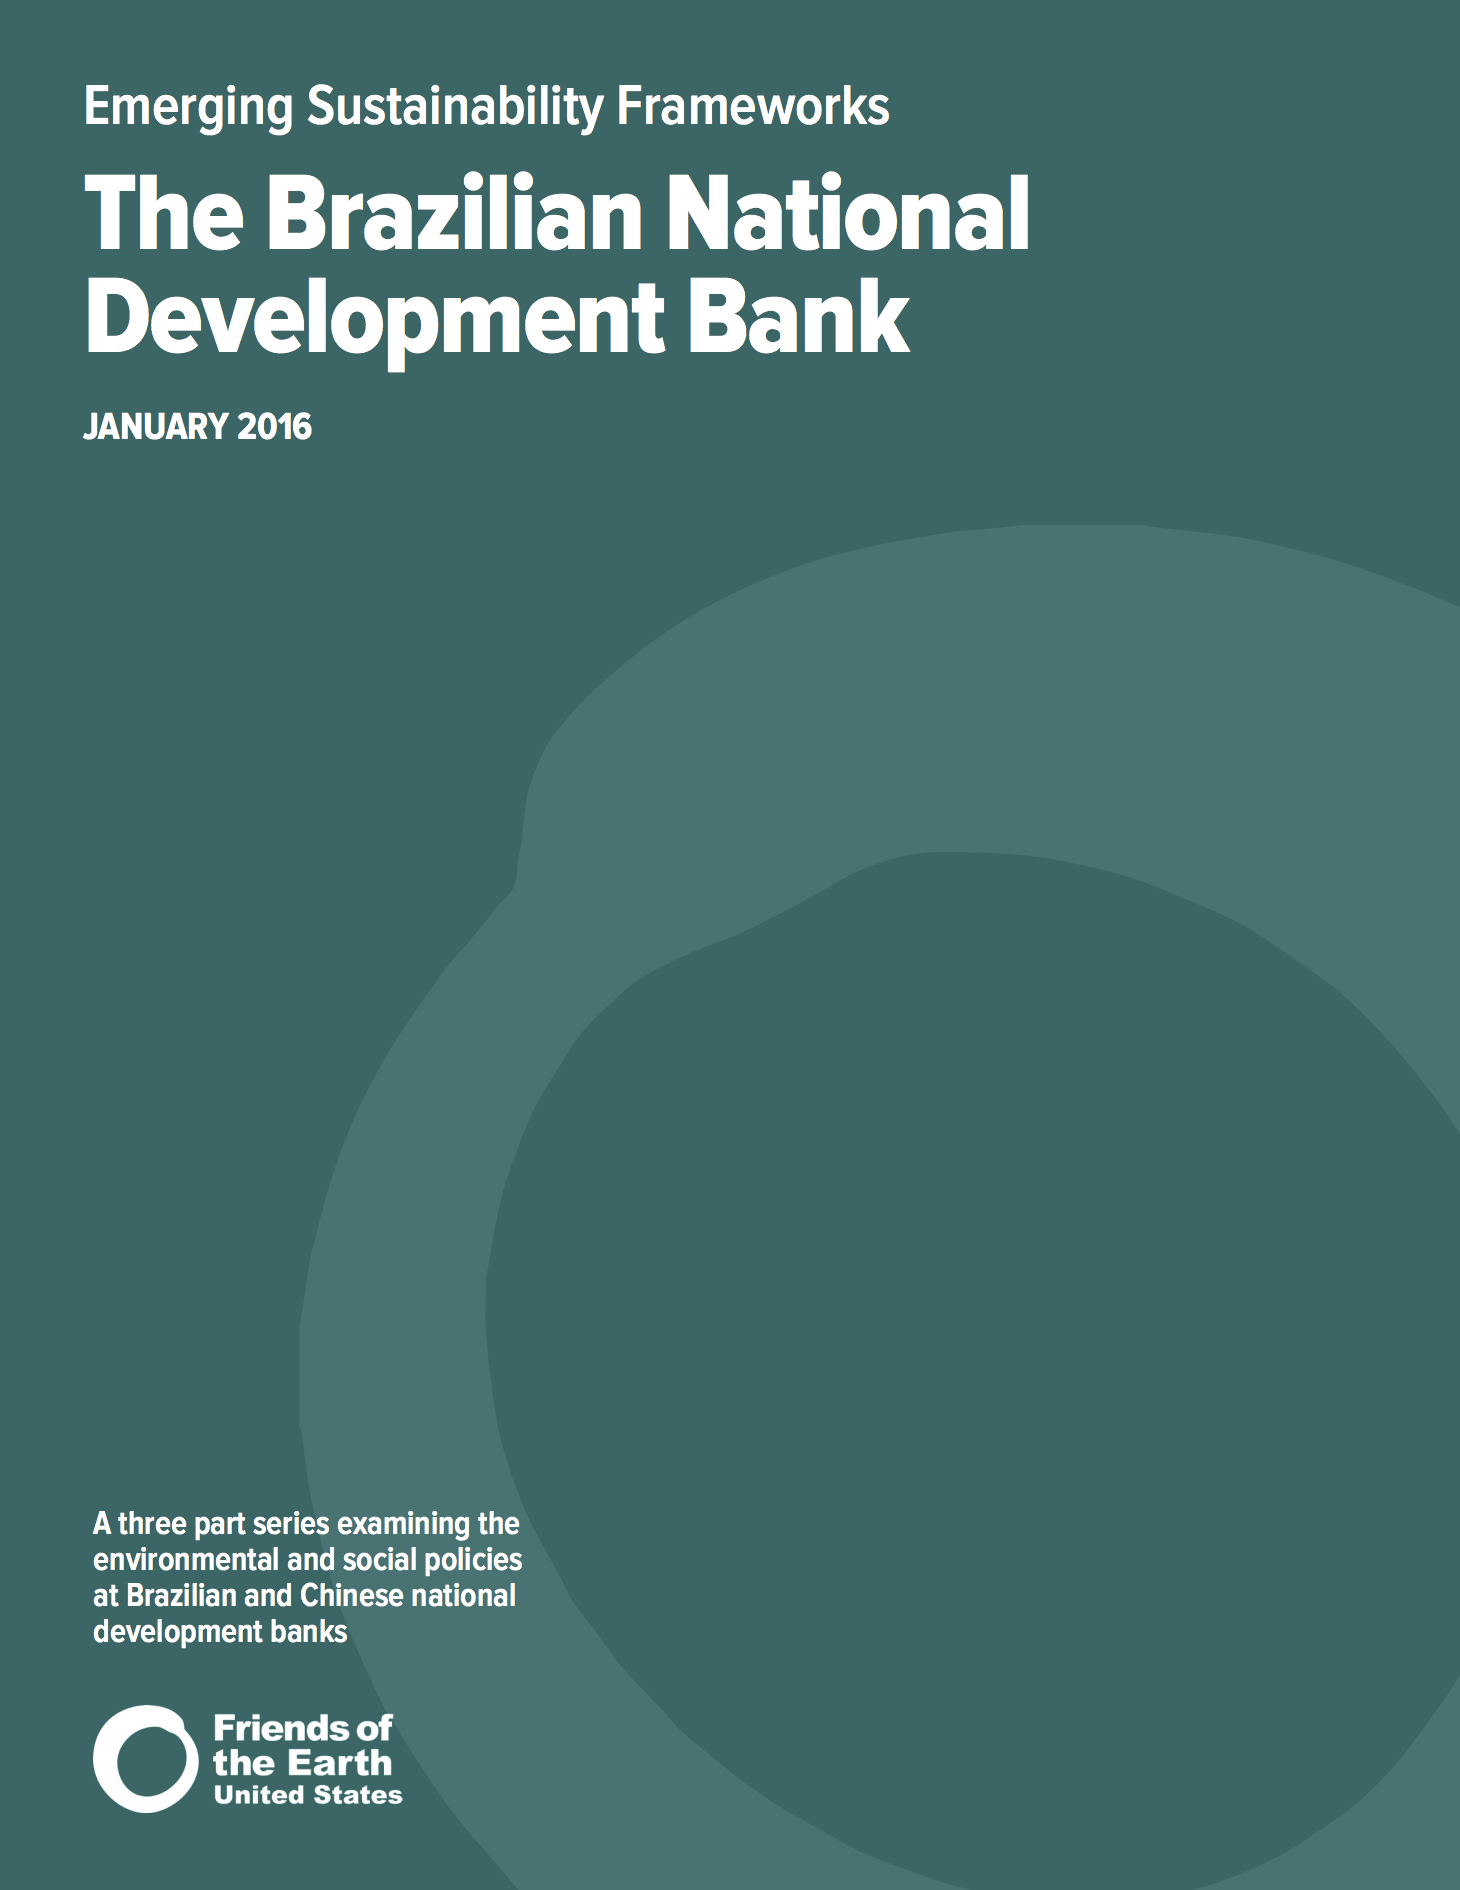 Emerging sustainability frameworks: The Brazilian National Development Bank